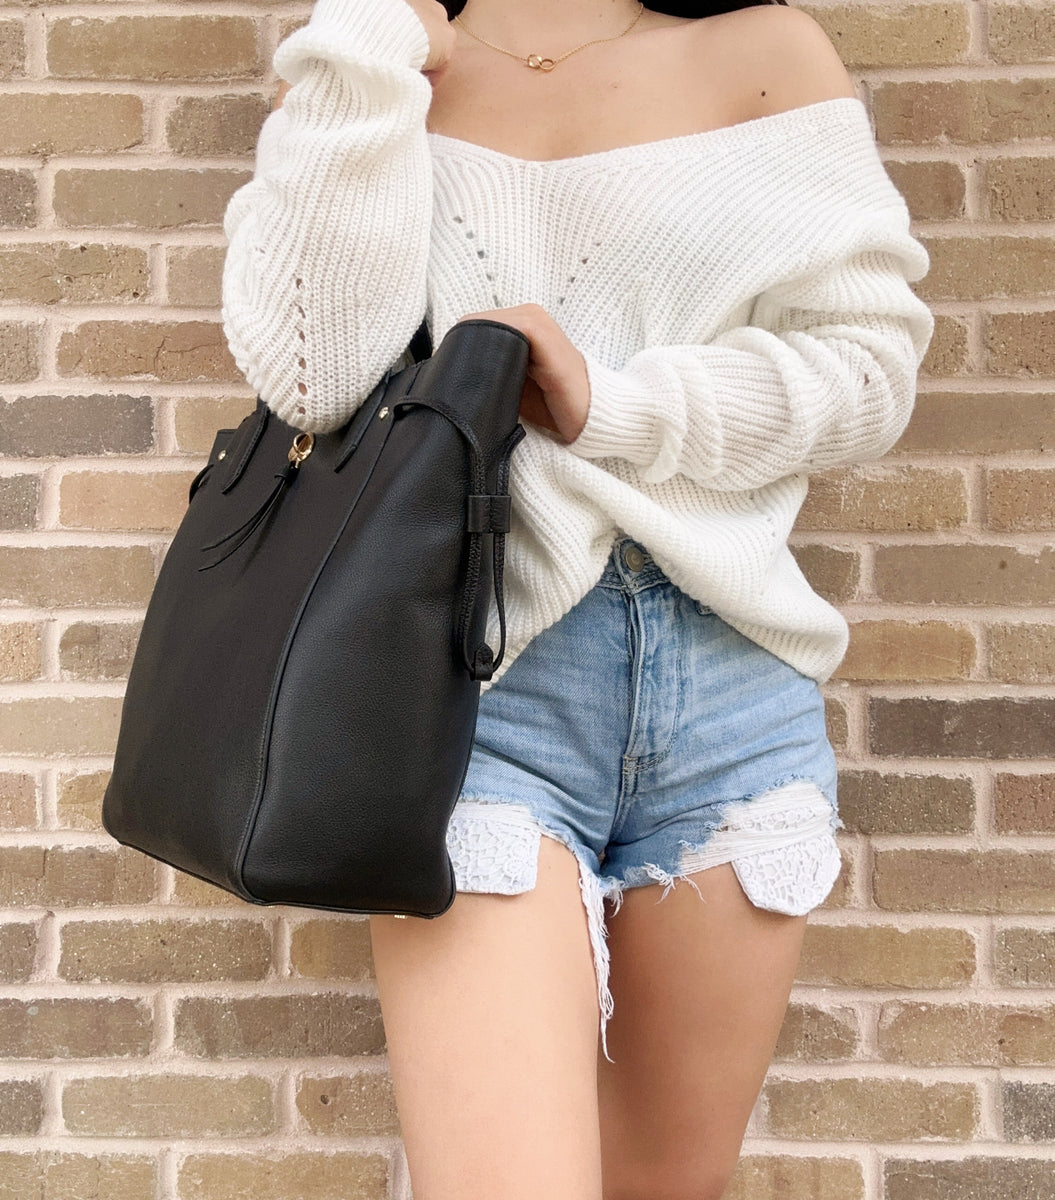 Kate Spade Marti Large Top Zip Tote Shoulder Bag Black Leather – Gaby's Bags